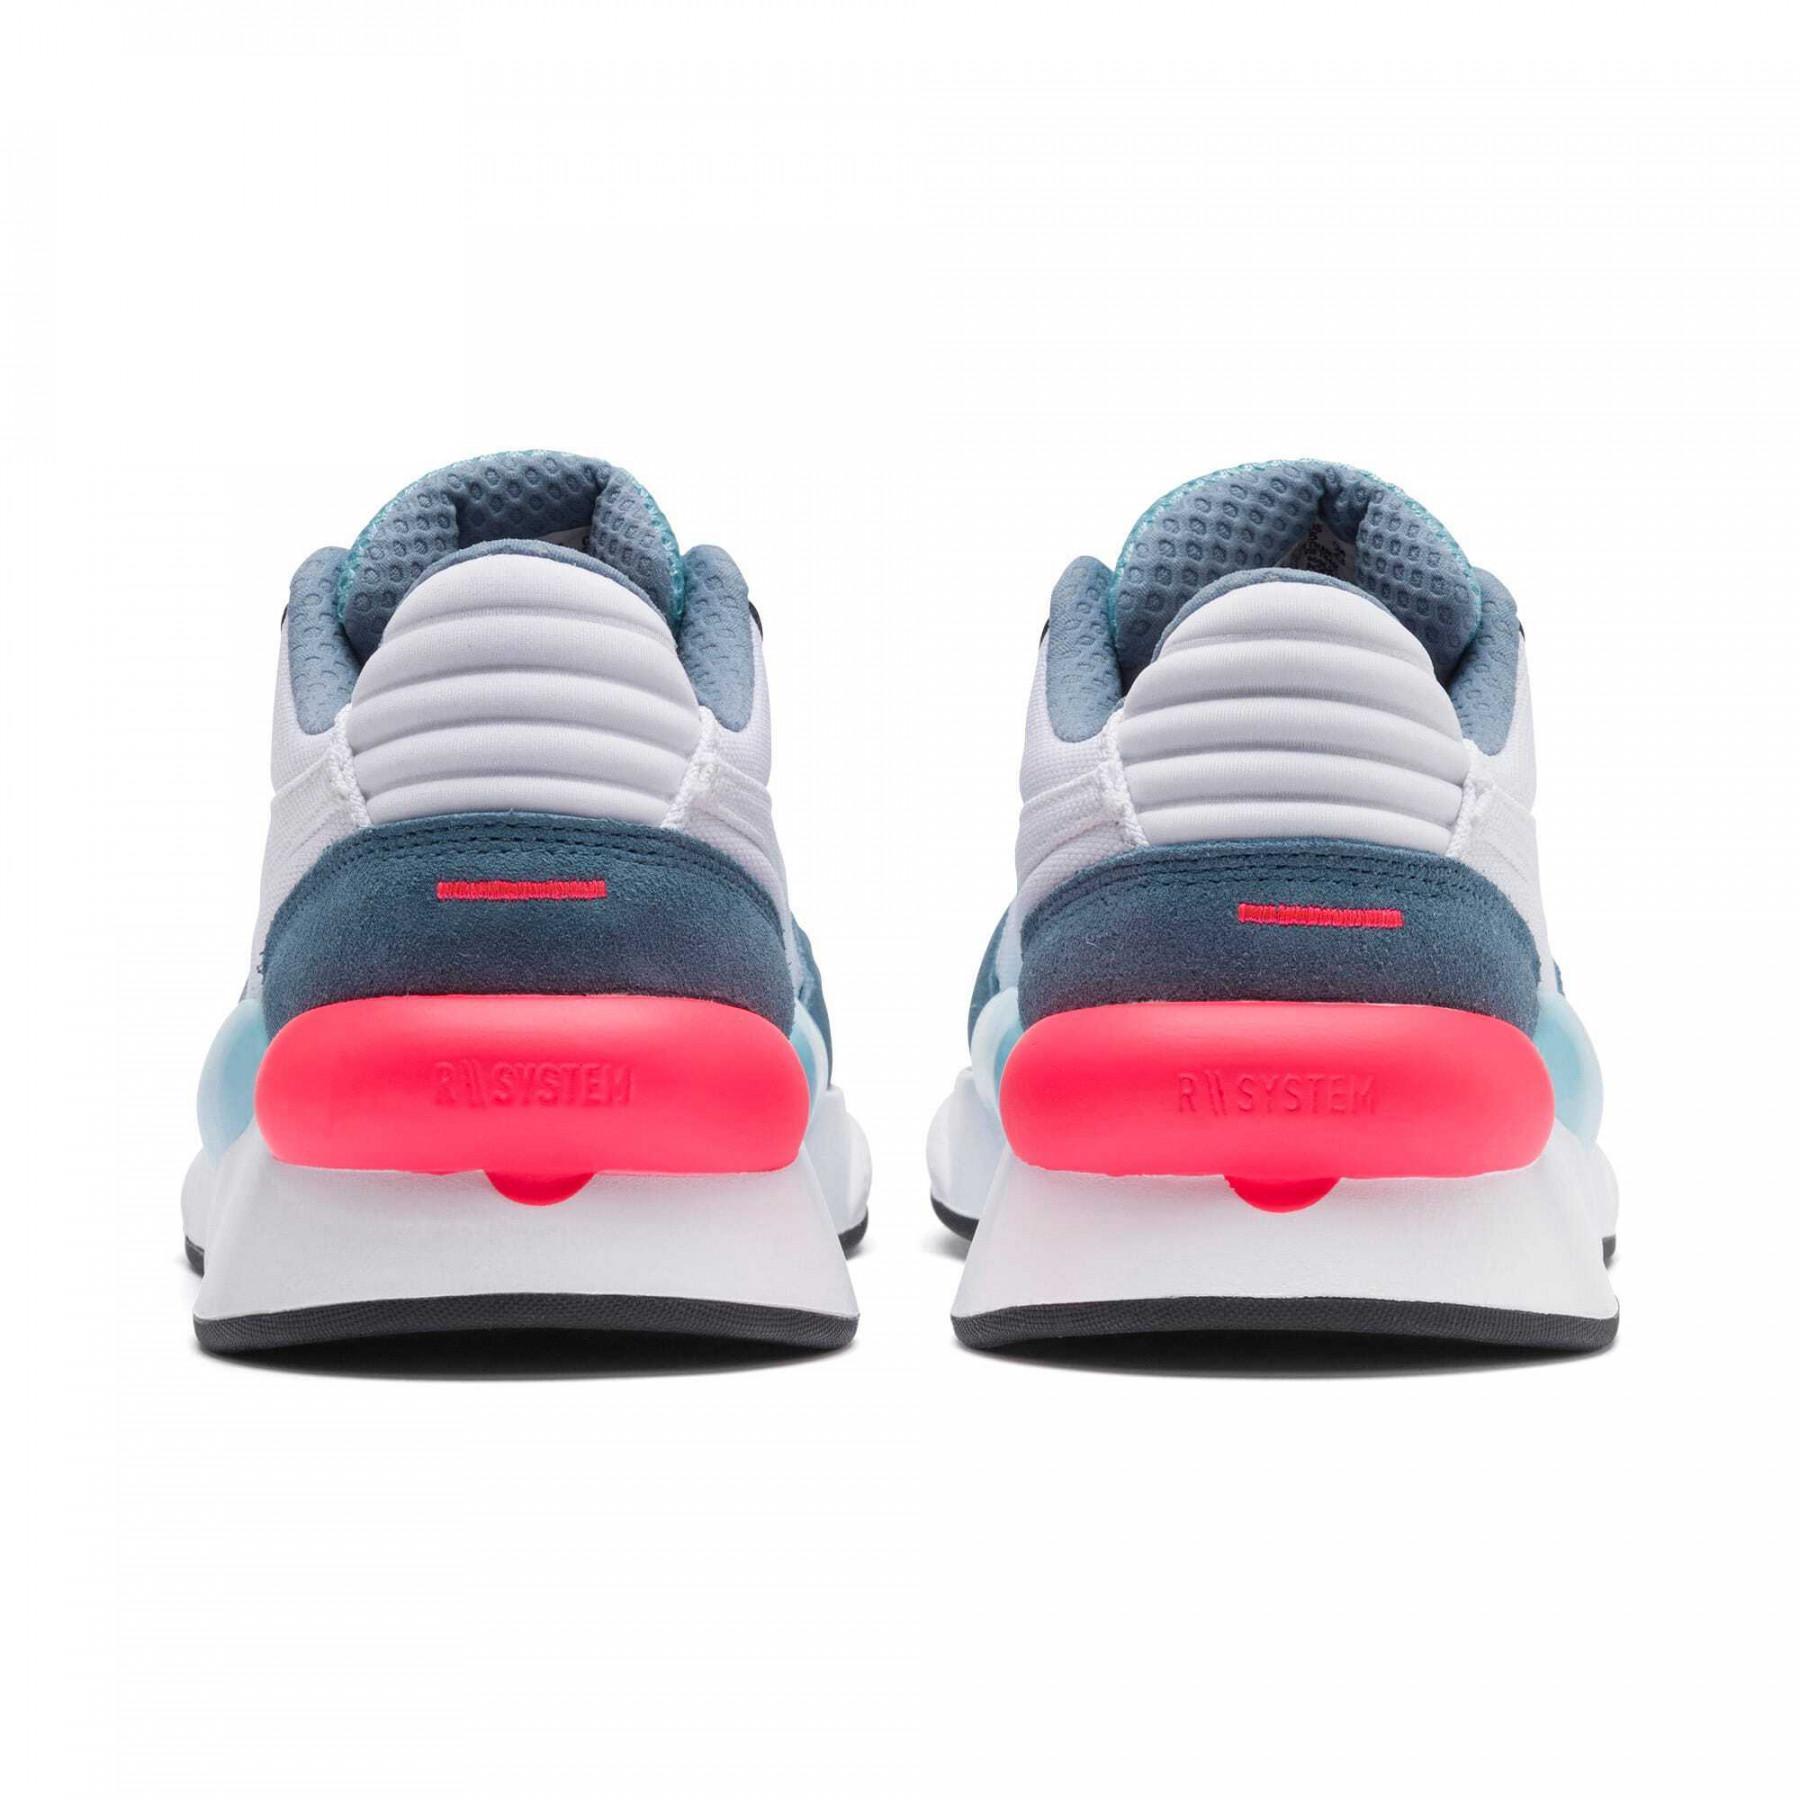 Women's sneakers Puma RS 9.8